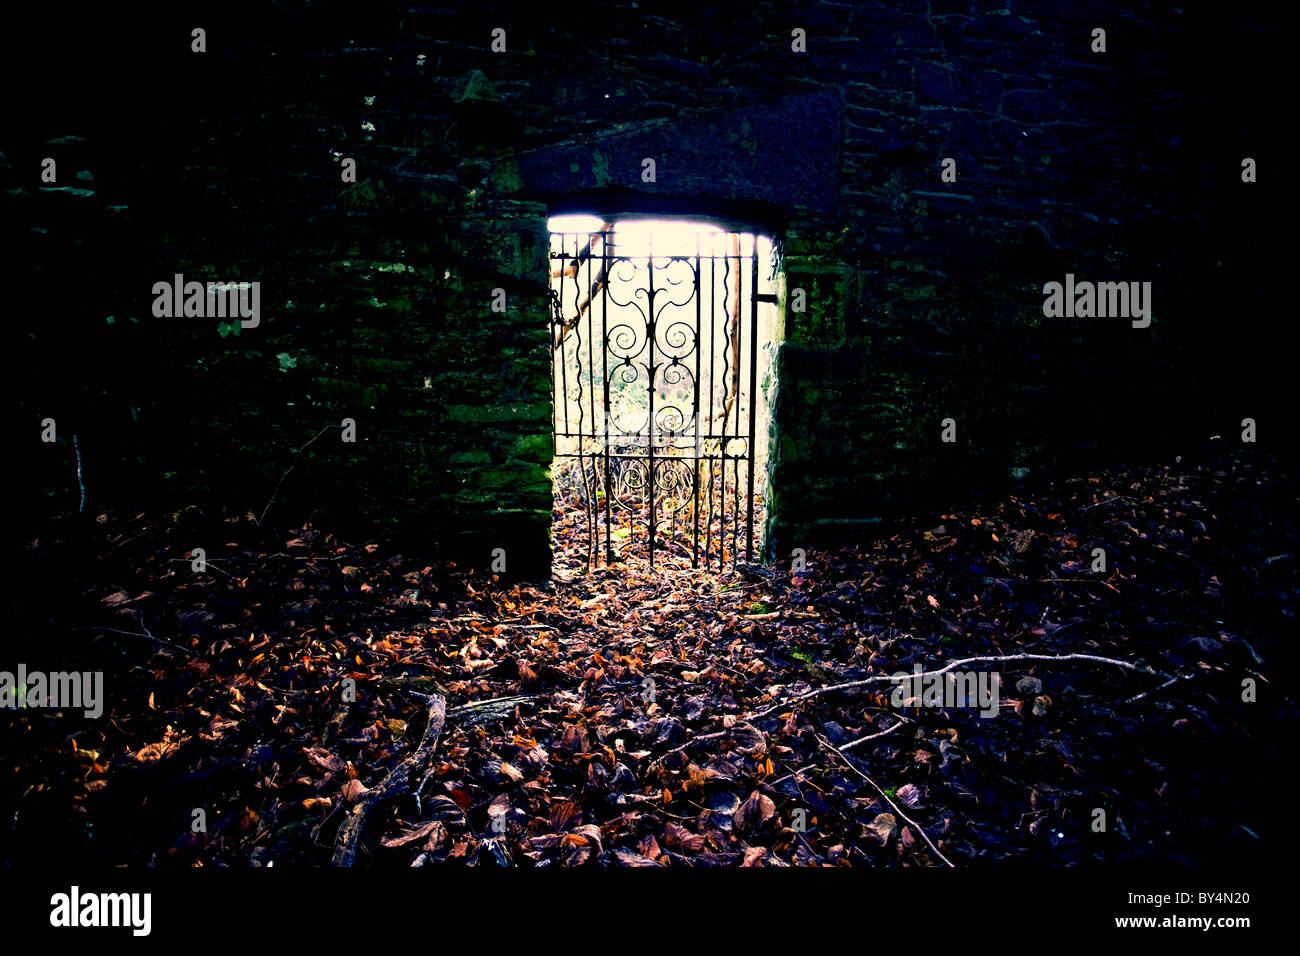 Gateway to a secret garden, Dumfries and Galloway, Scotland Stock Photo